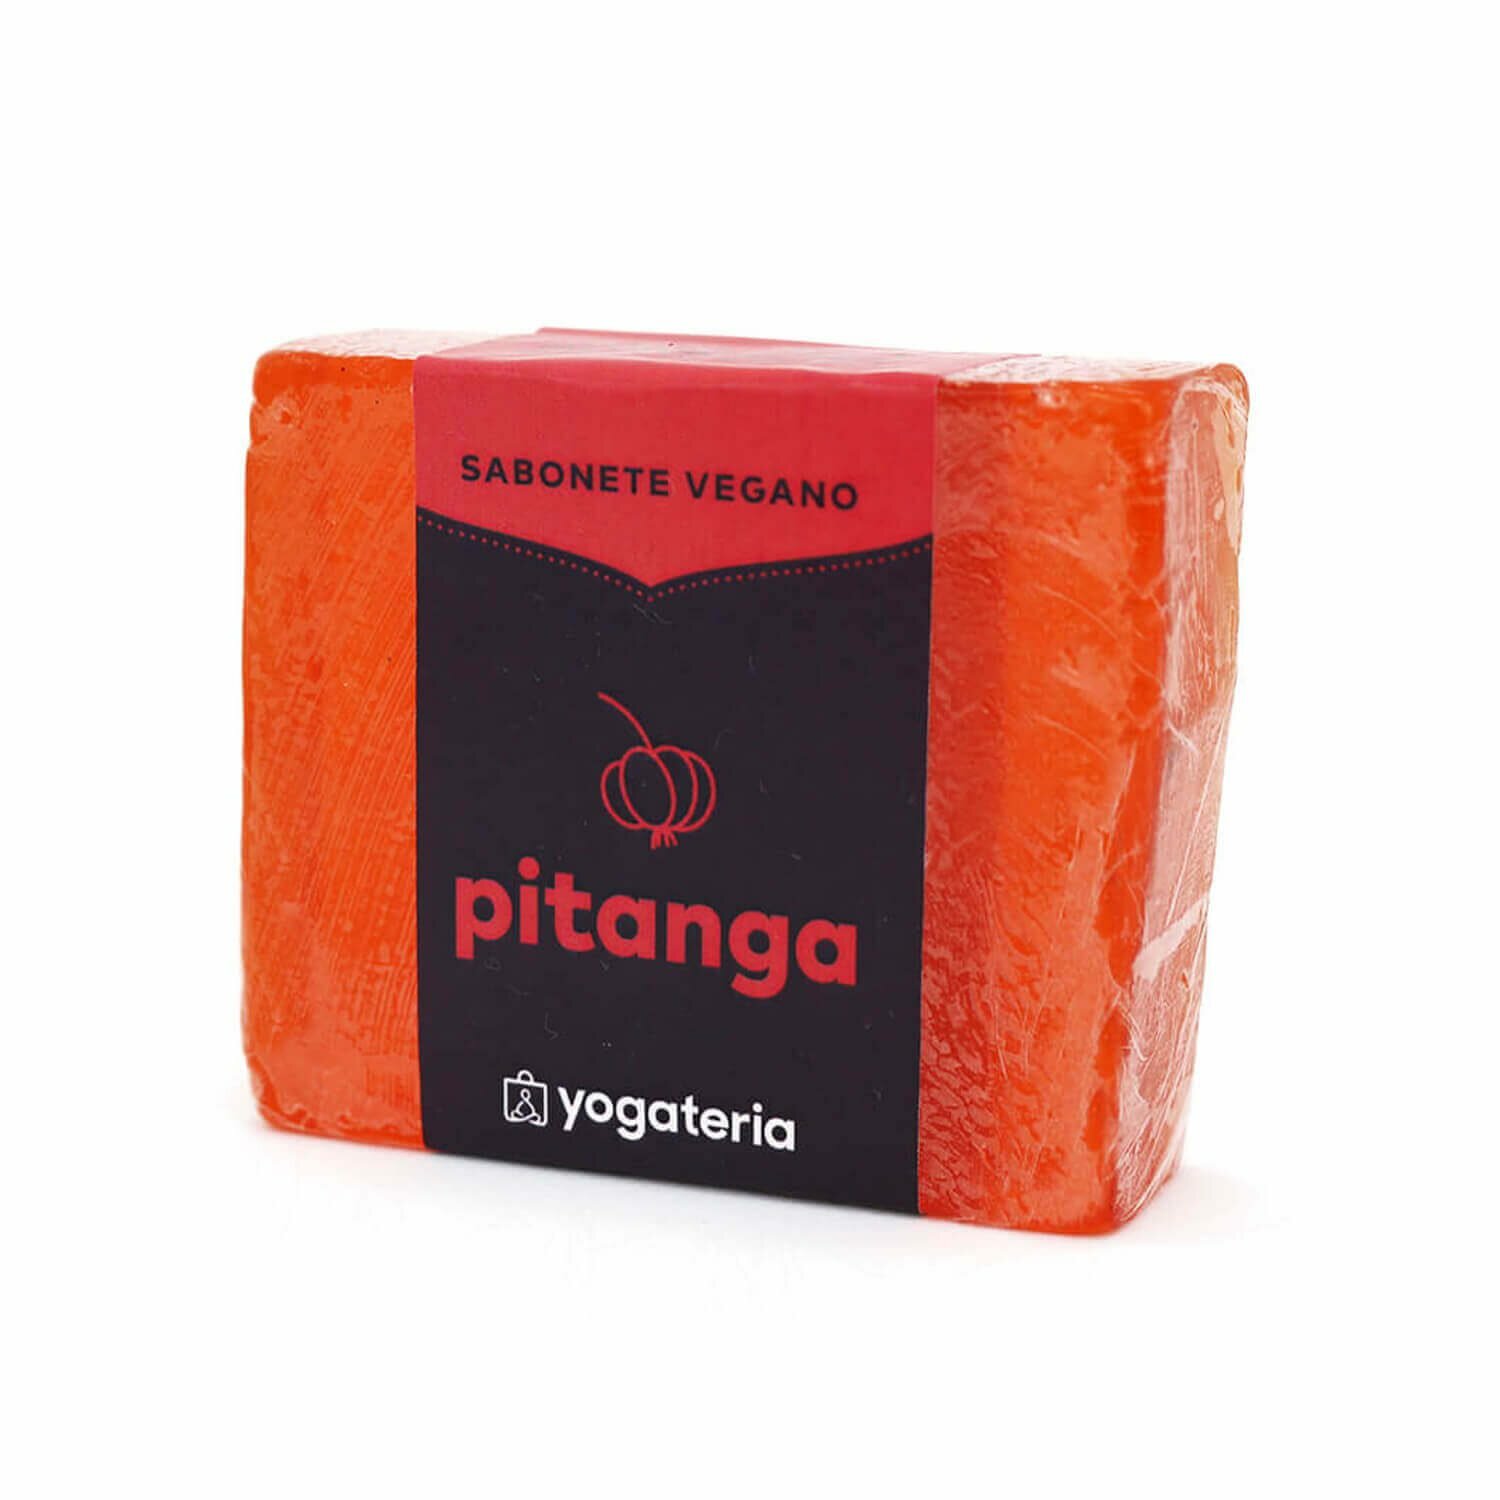 Sabonete Vegano Pitanga 6